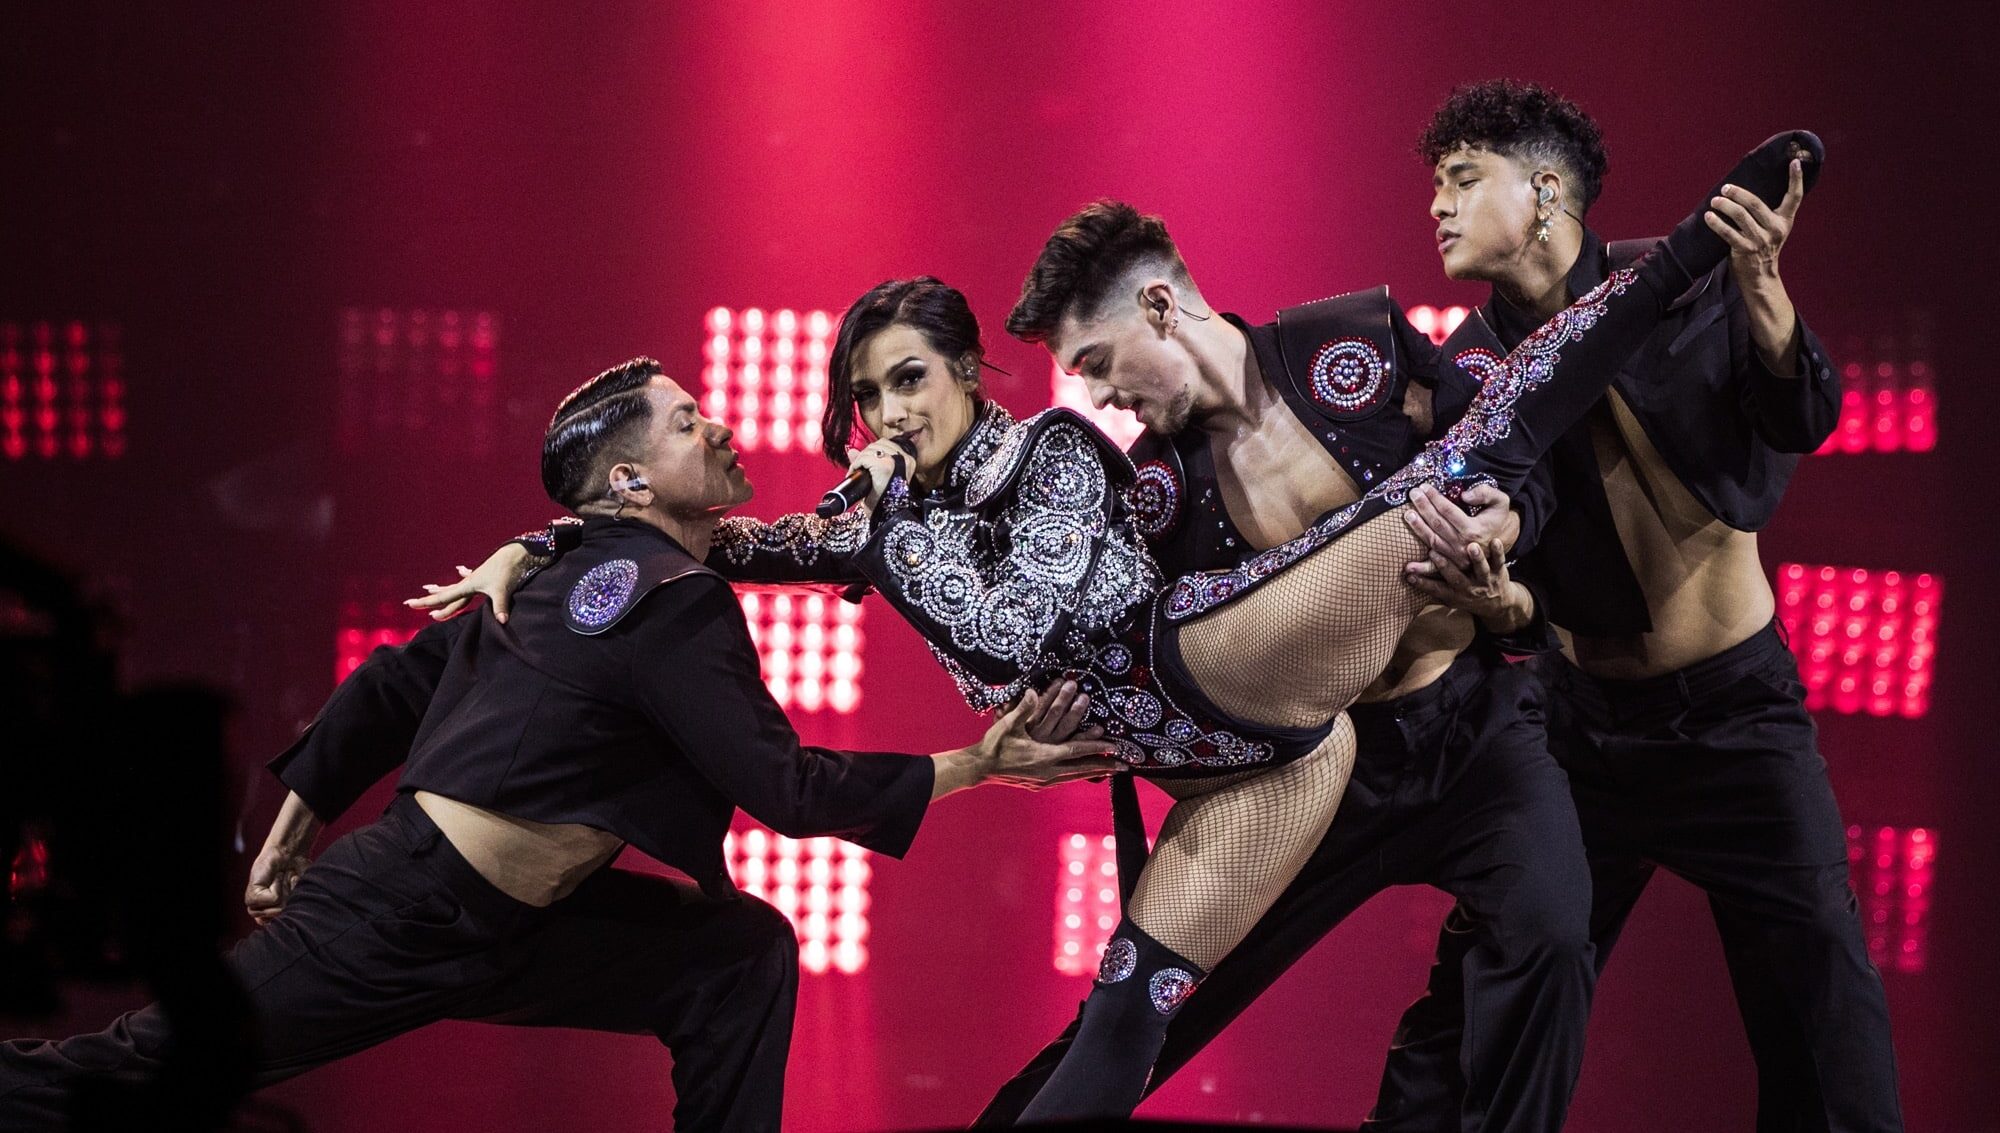 ¿Qué hizo Chanel en Eurovisión